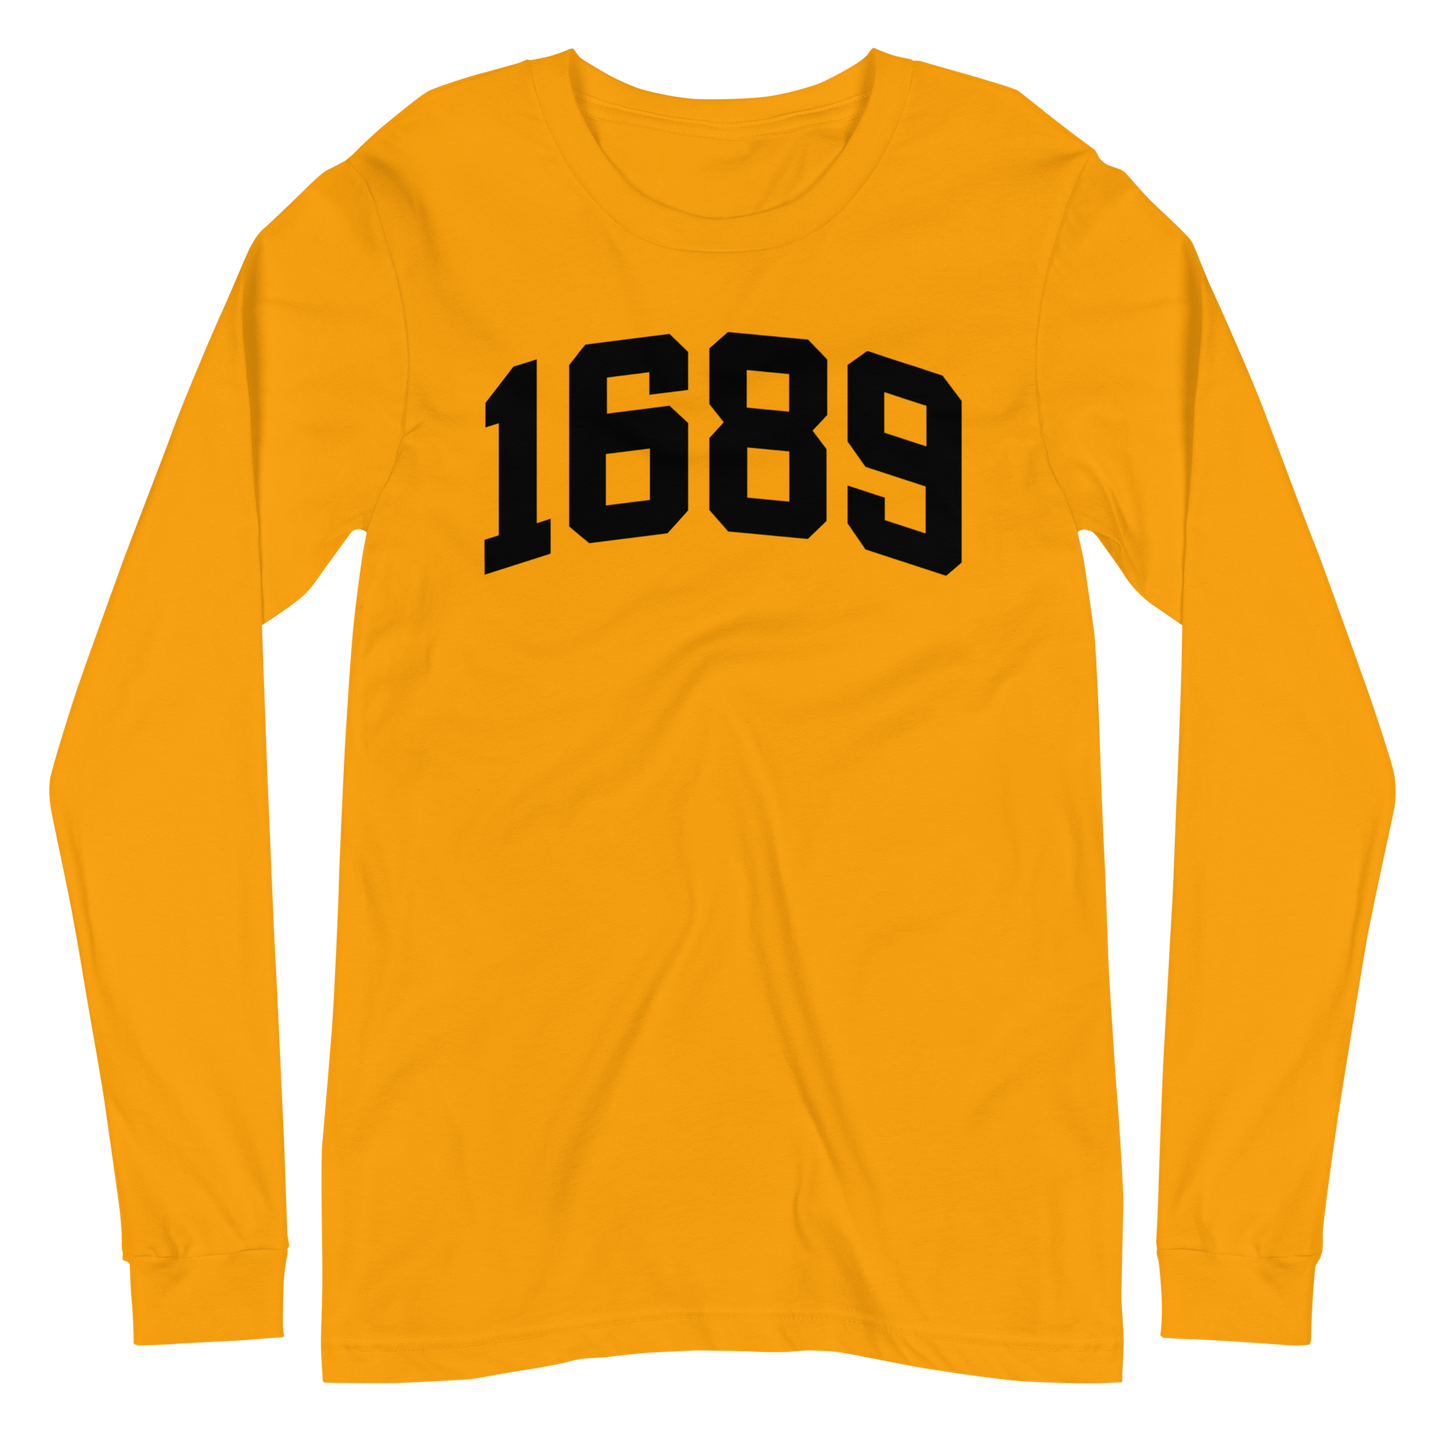 1689 Long Sleeve Shirt